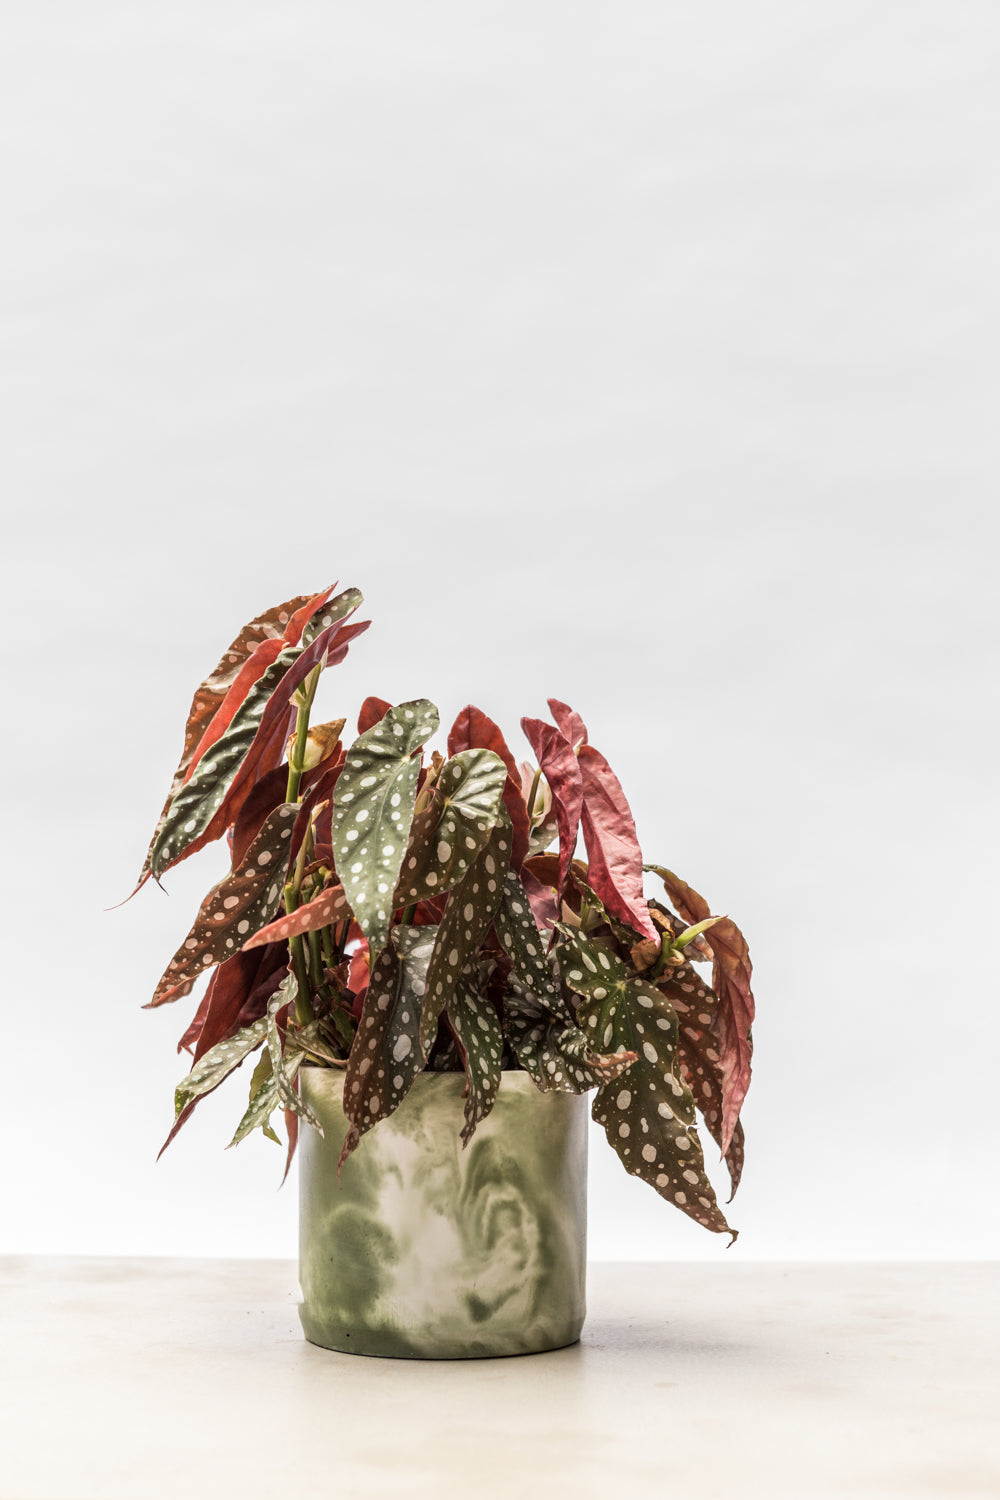 Polkadot Begonia in a Concrete Jungle Hand-Cast Pot